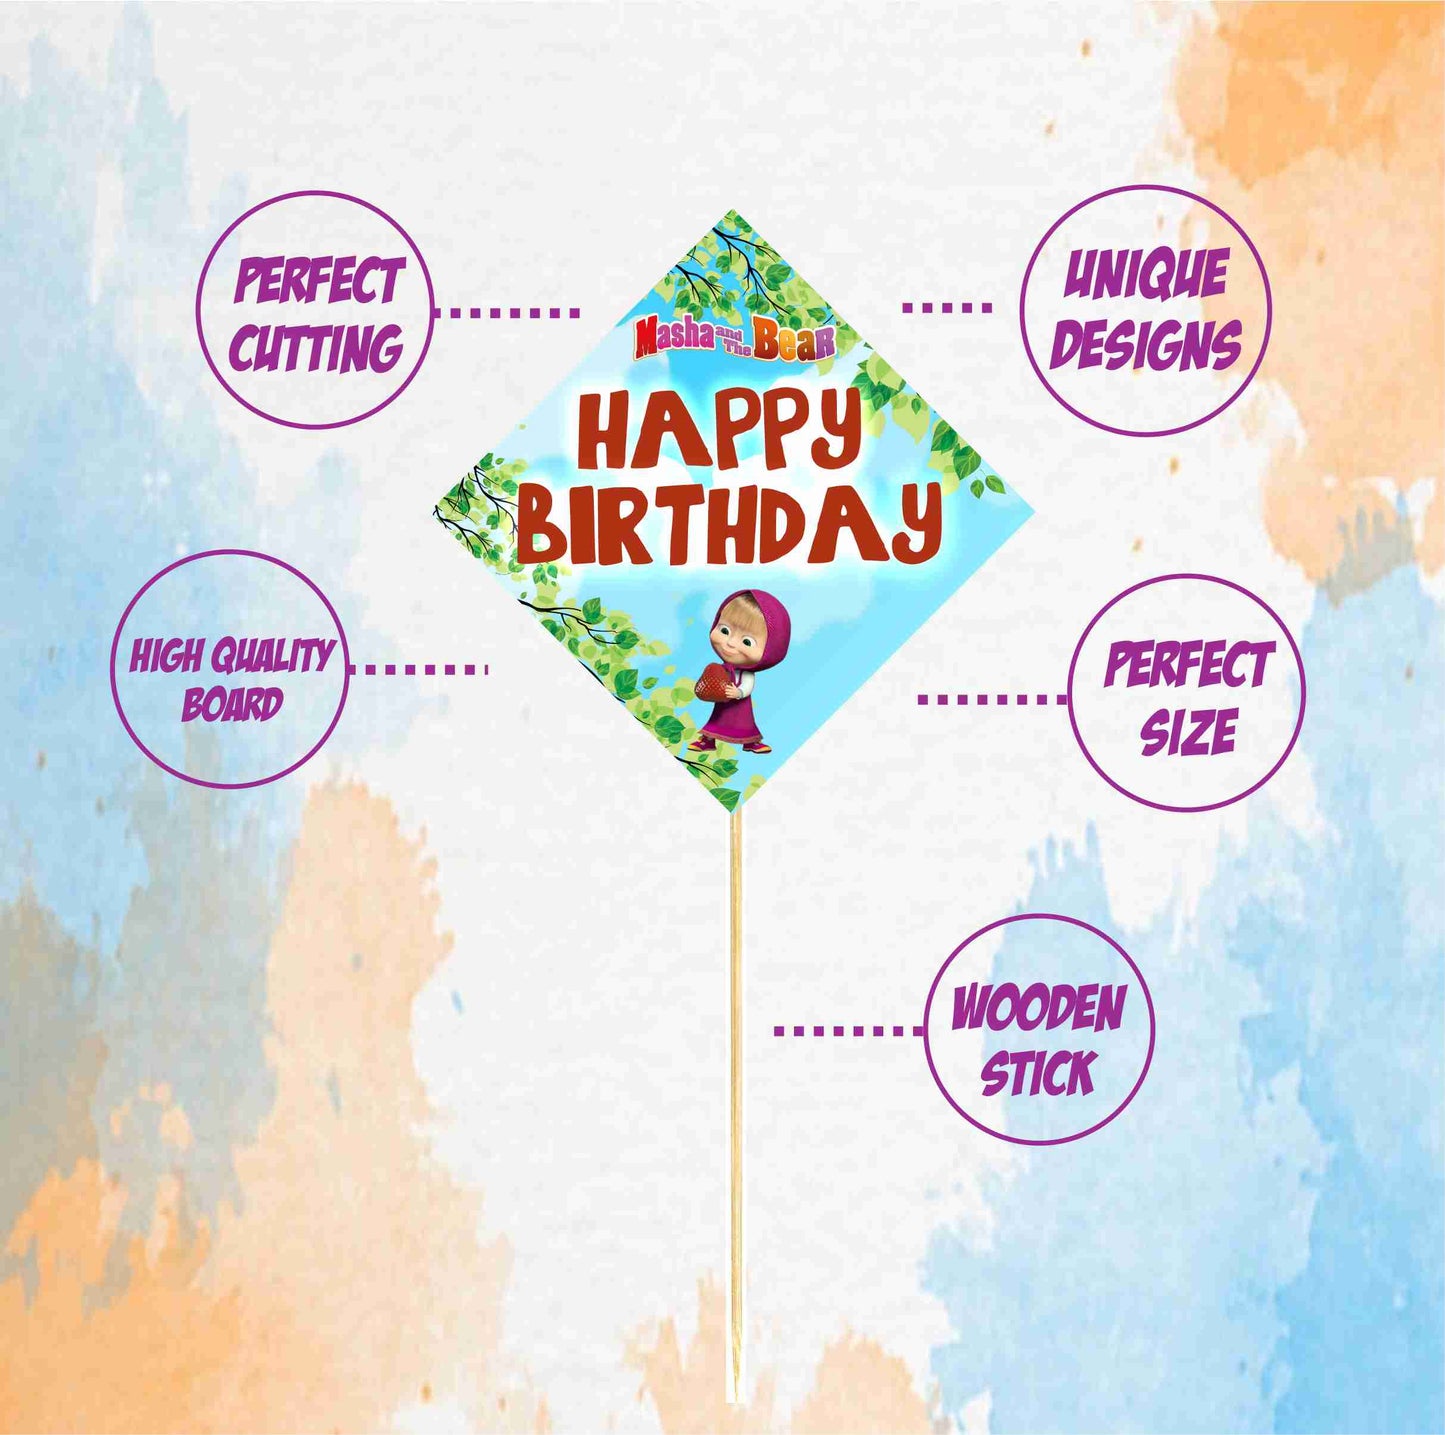 Masha Bear Theme Cake Topper Pack of 10 Nos for Birthday Cake Decoration Theme Party Item For Boys Girls Adults Birthday Theme Decor